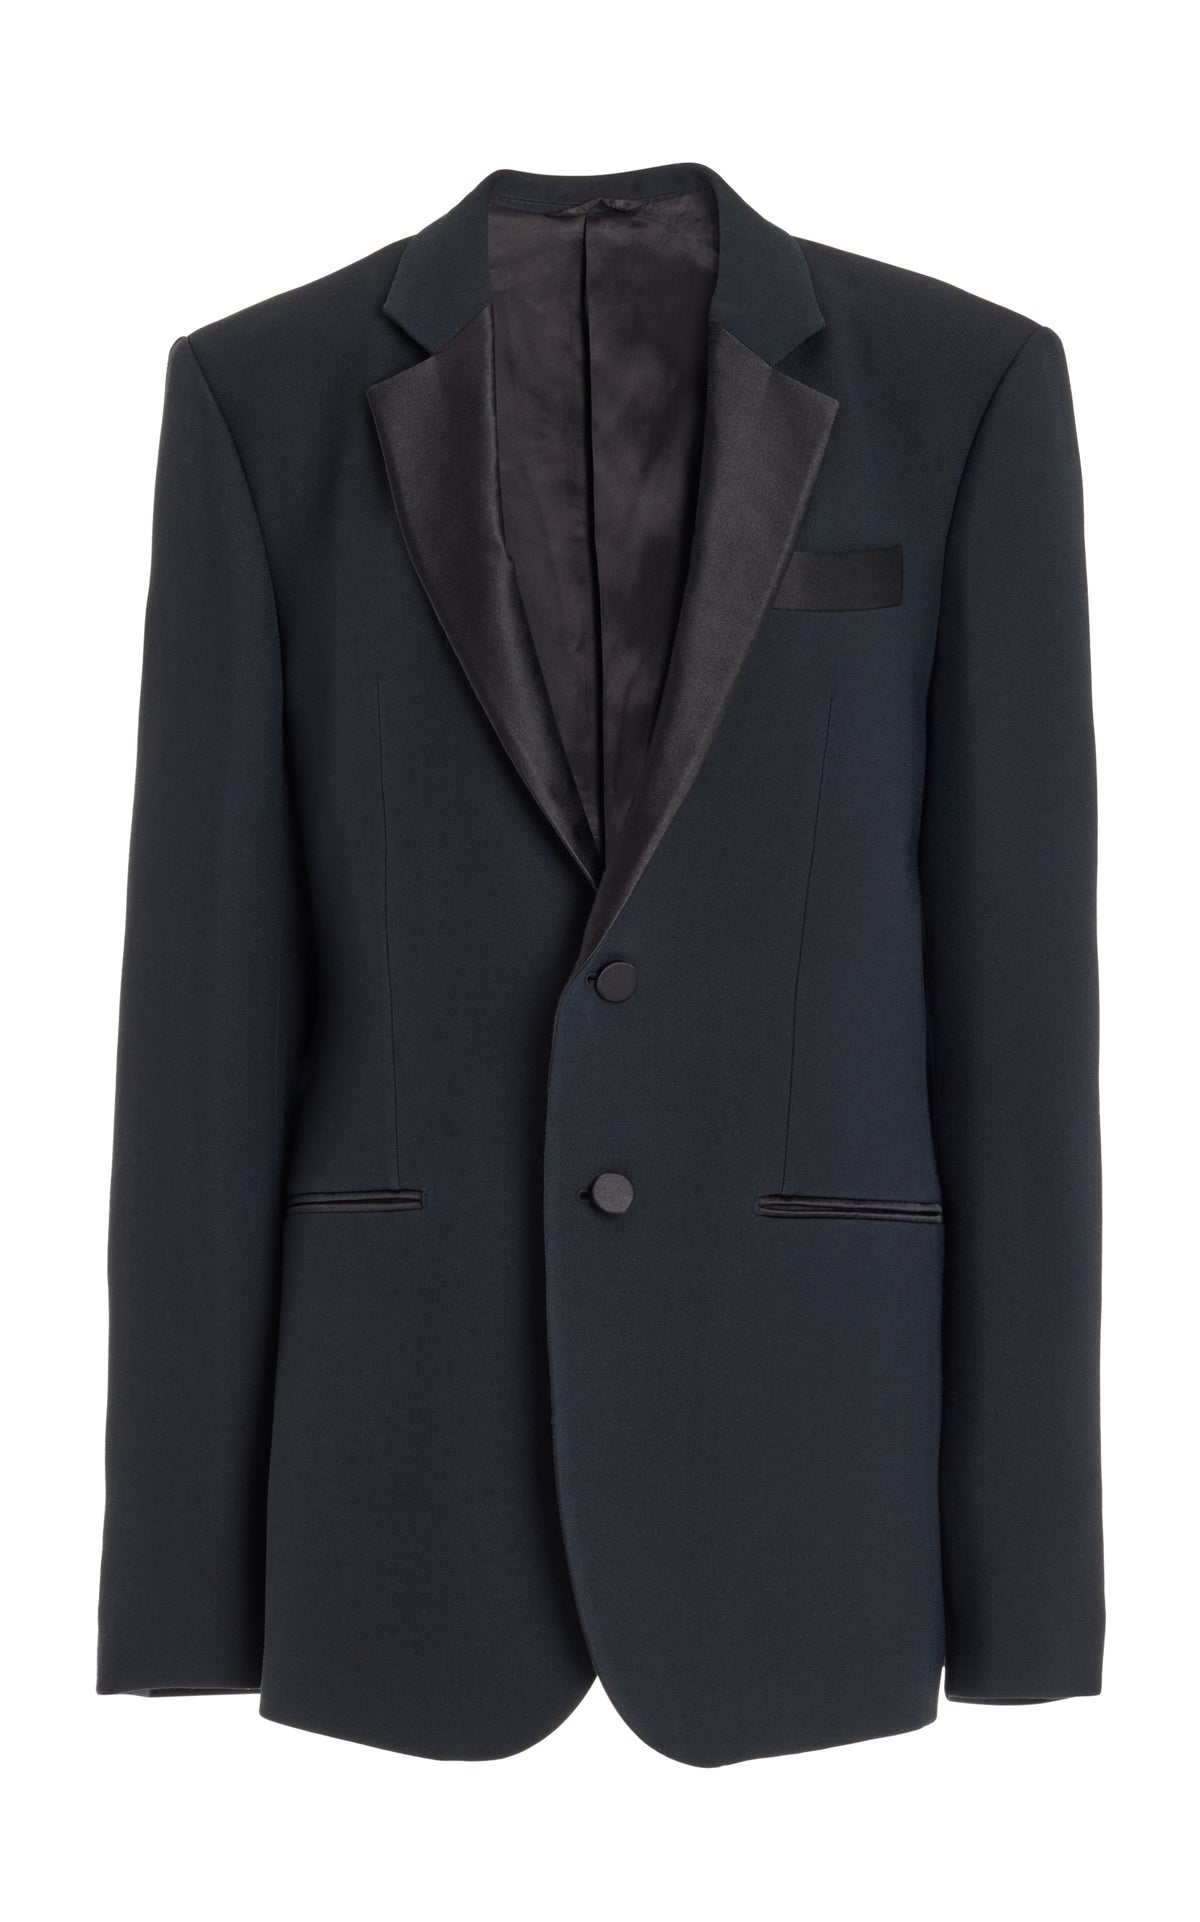 Nicolson Jacket in Black Wool Silk Cady